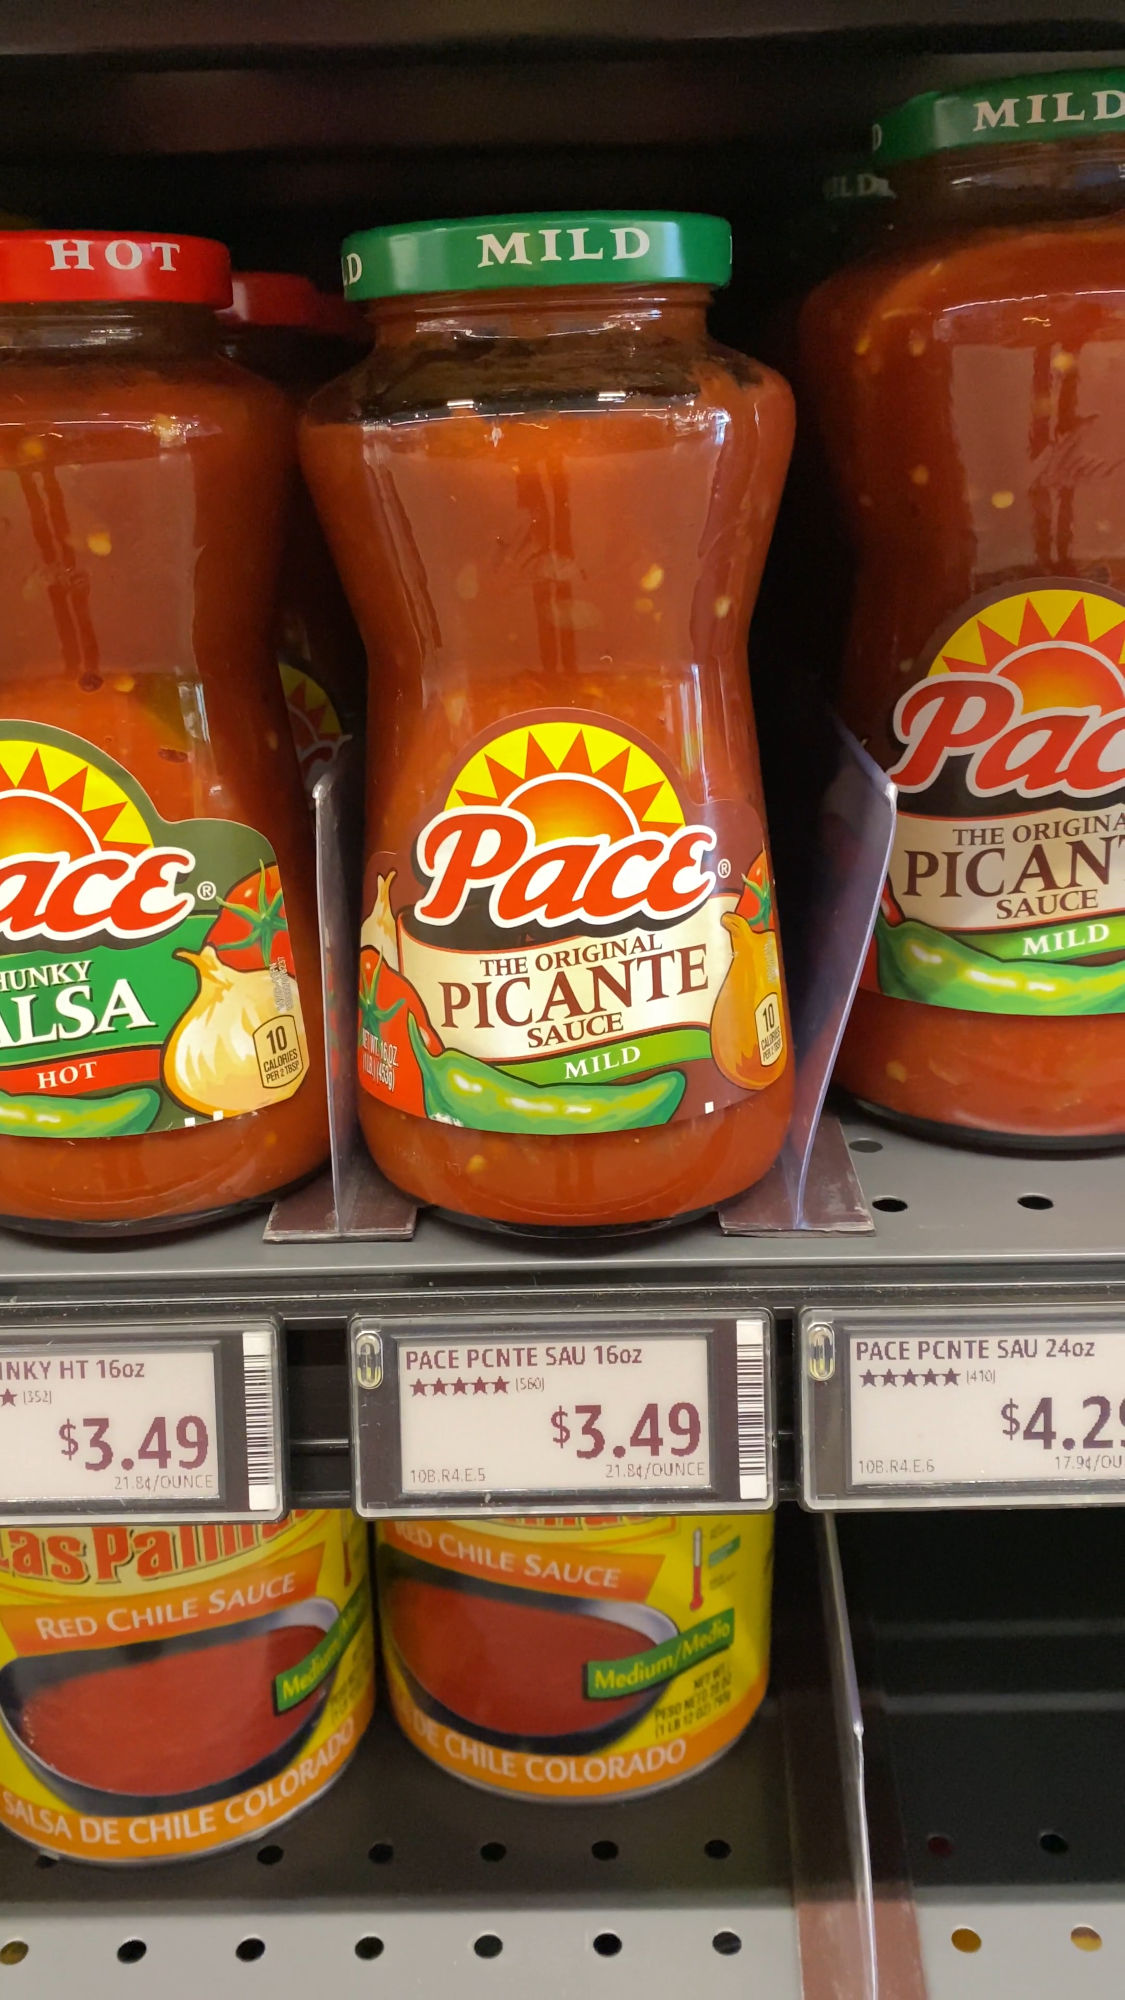 Pace Picante Sauce Amazon Prime $3.49